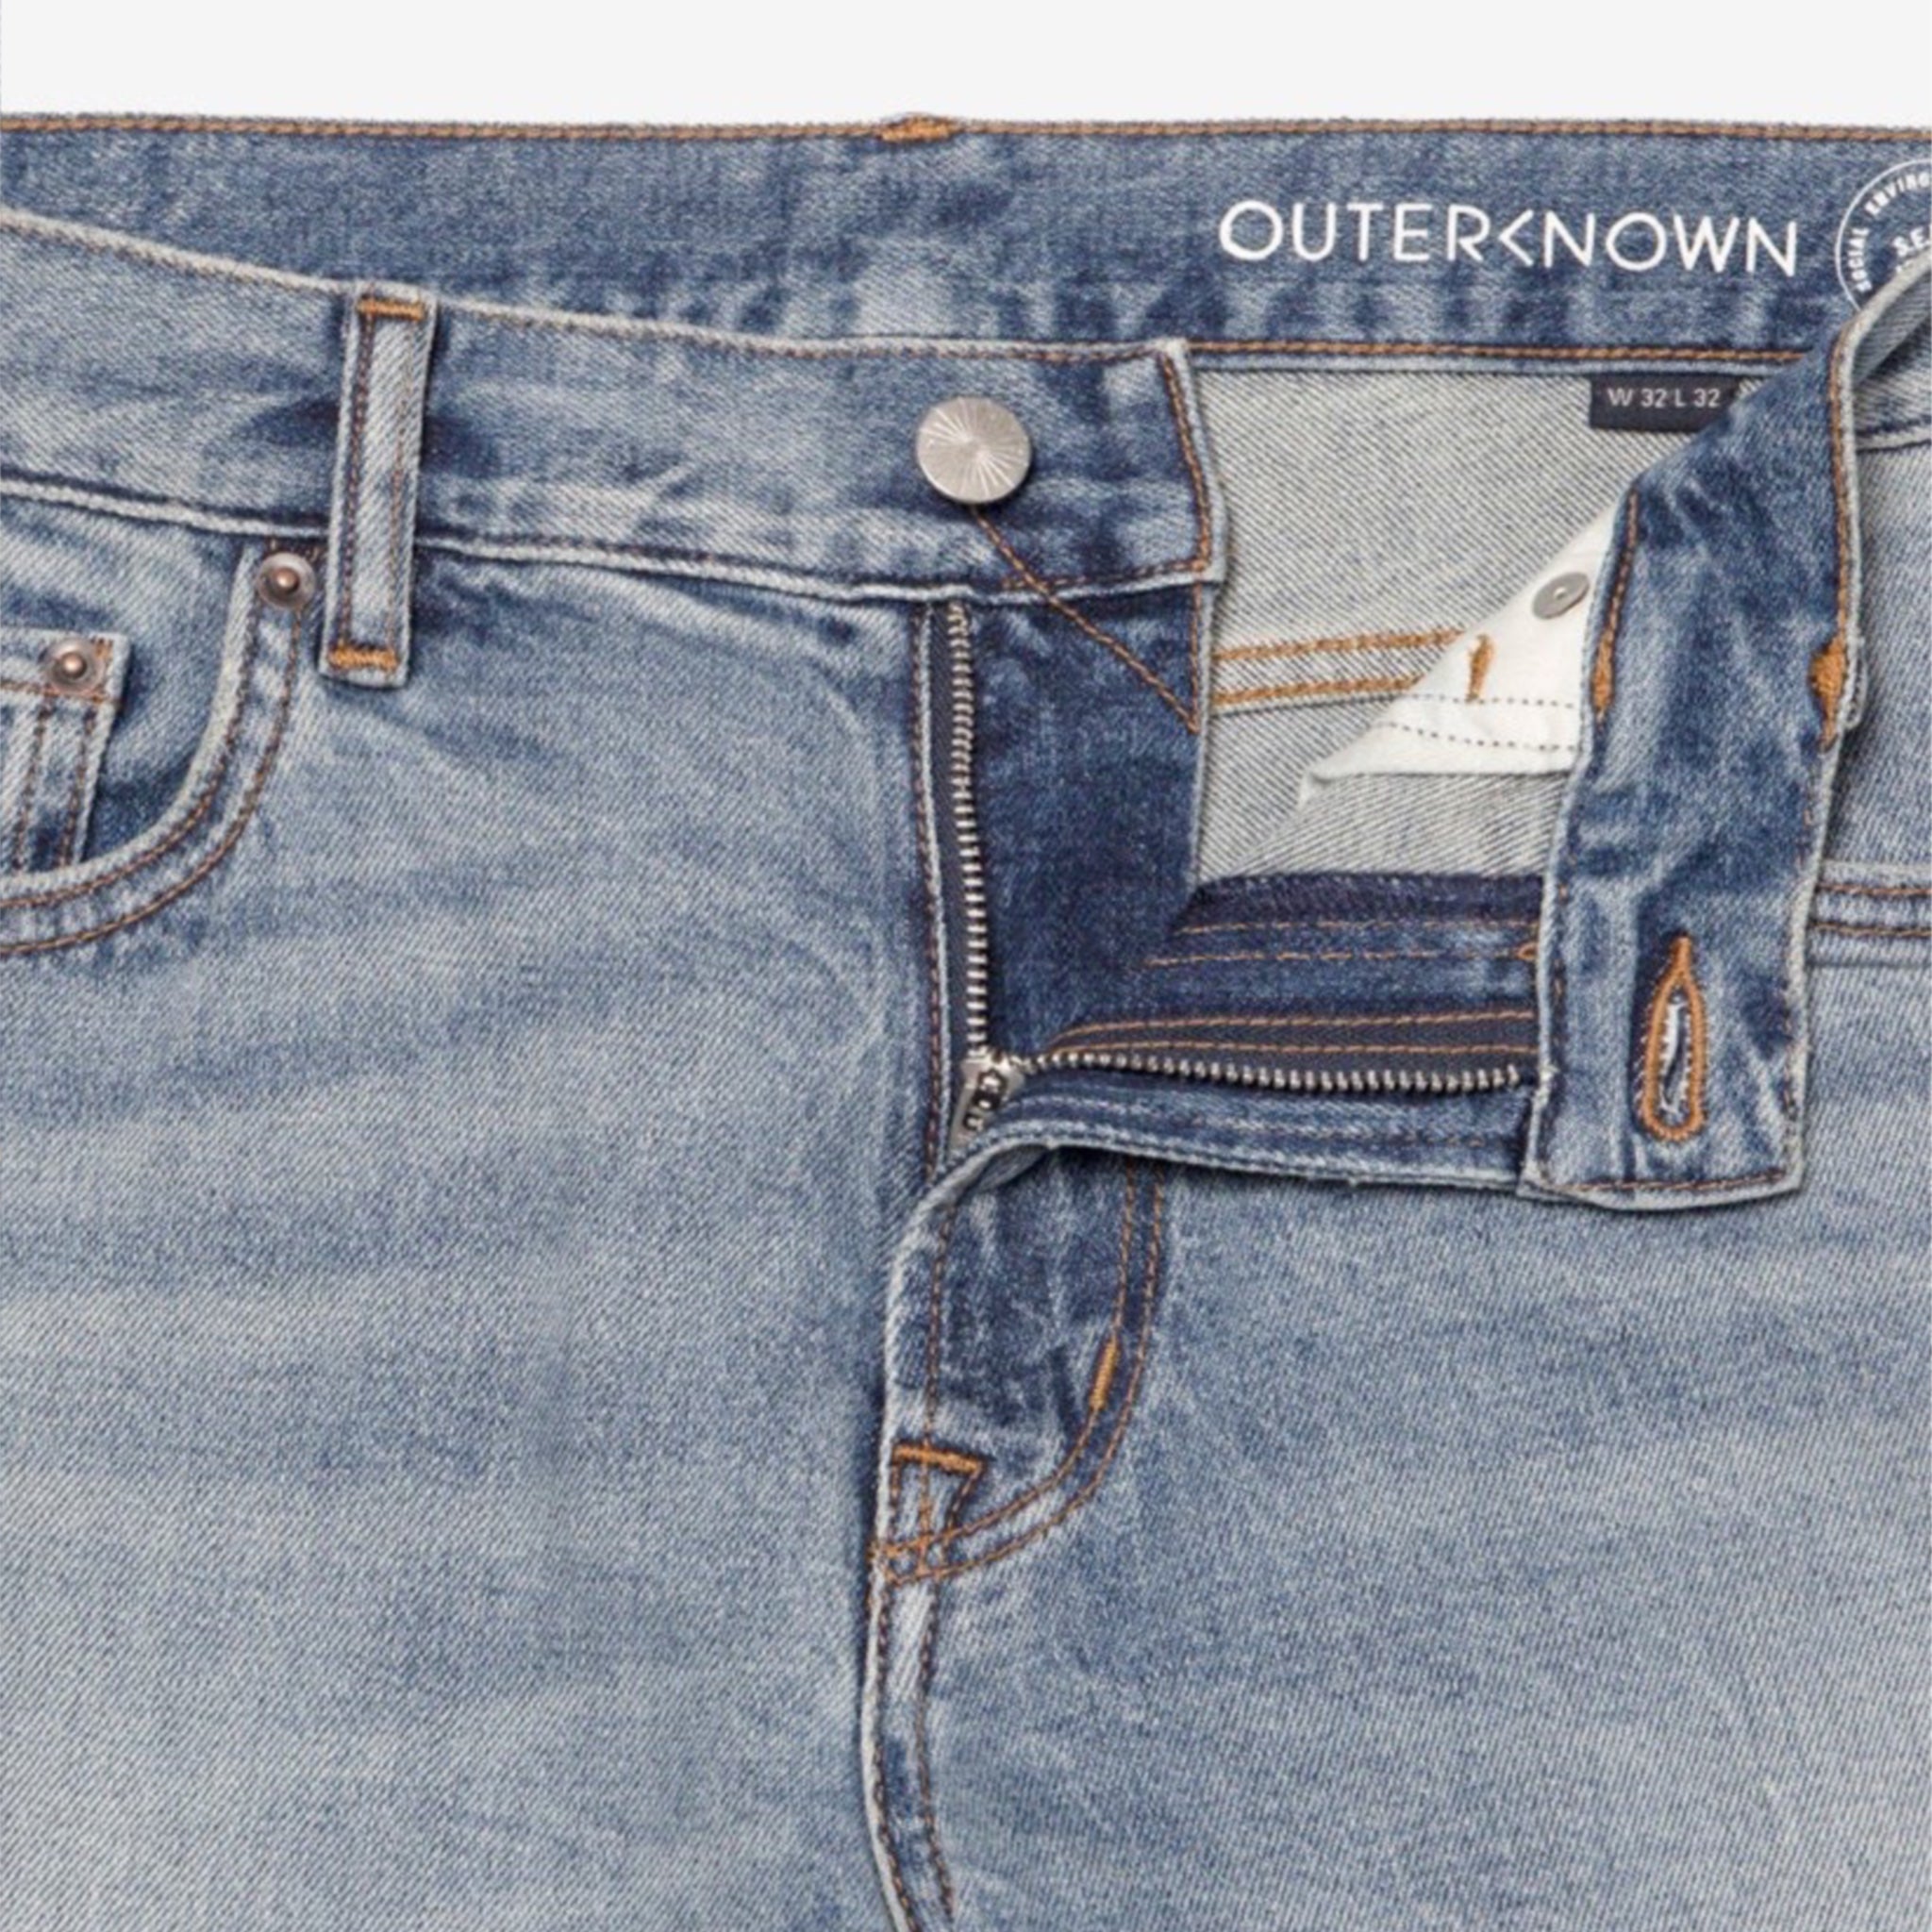 Outerknown Ambassador Slim Fit Jeans - Baja Blue